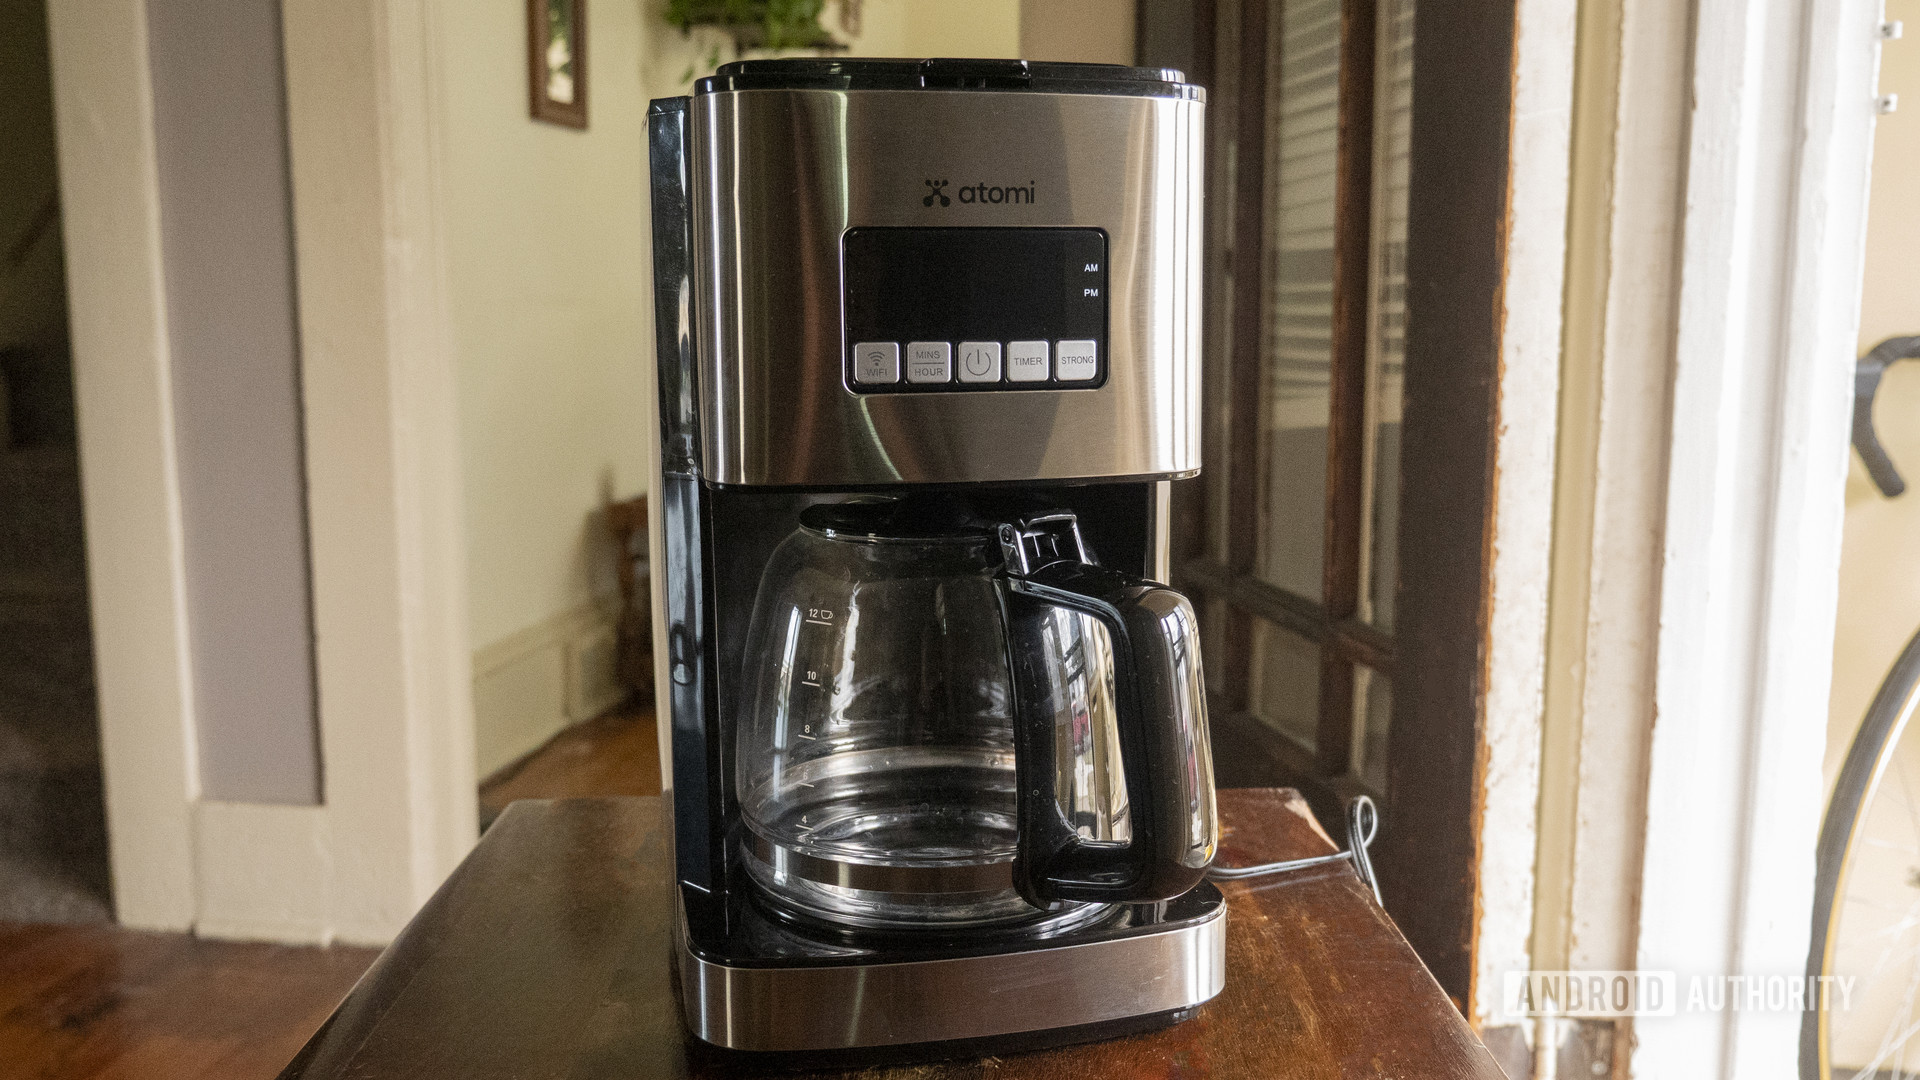 Why You Need a Smart WiFi Coffee Maker  Wifi coffee maker, Coffee maker,  Coffee